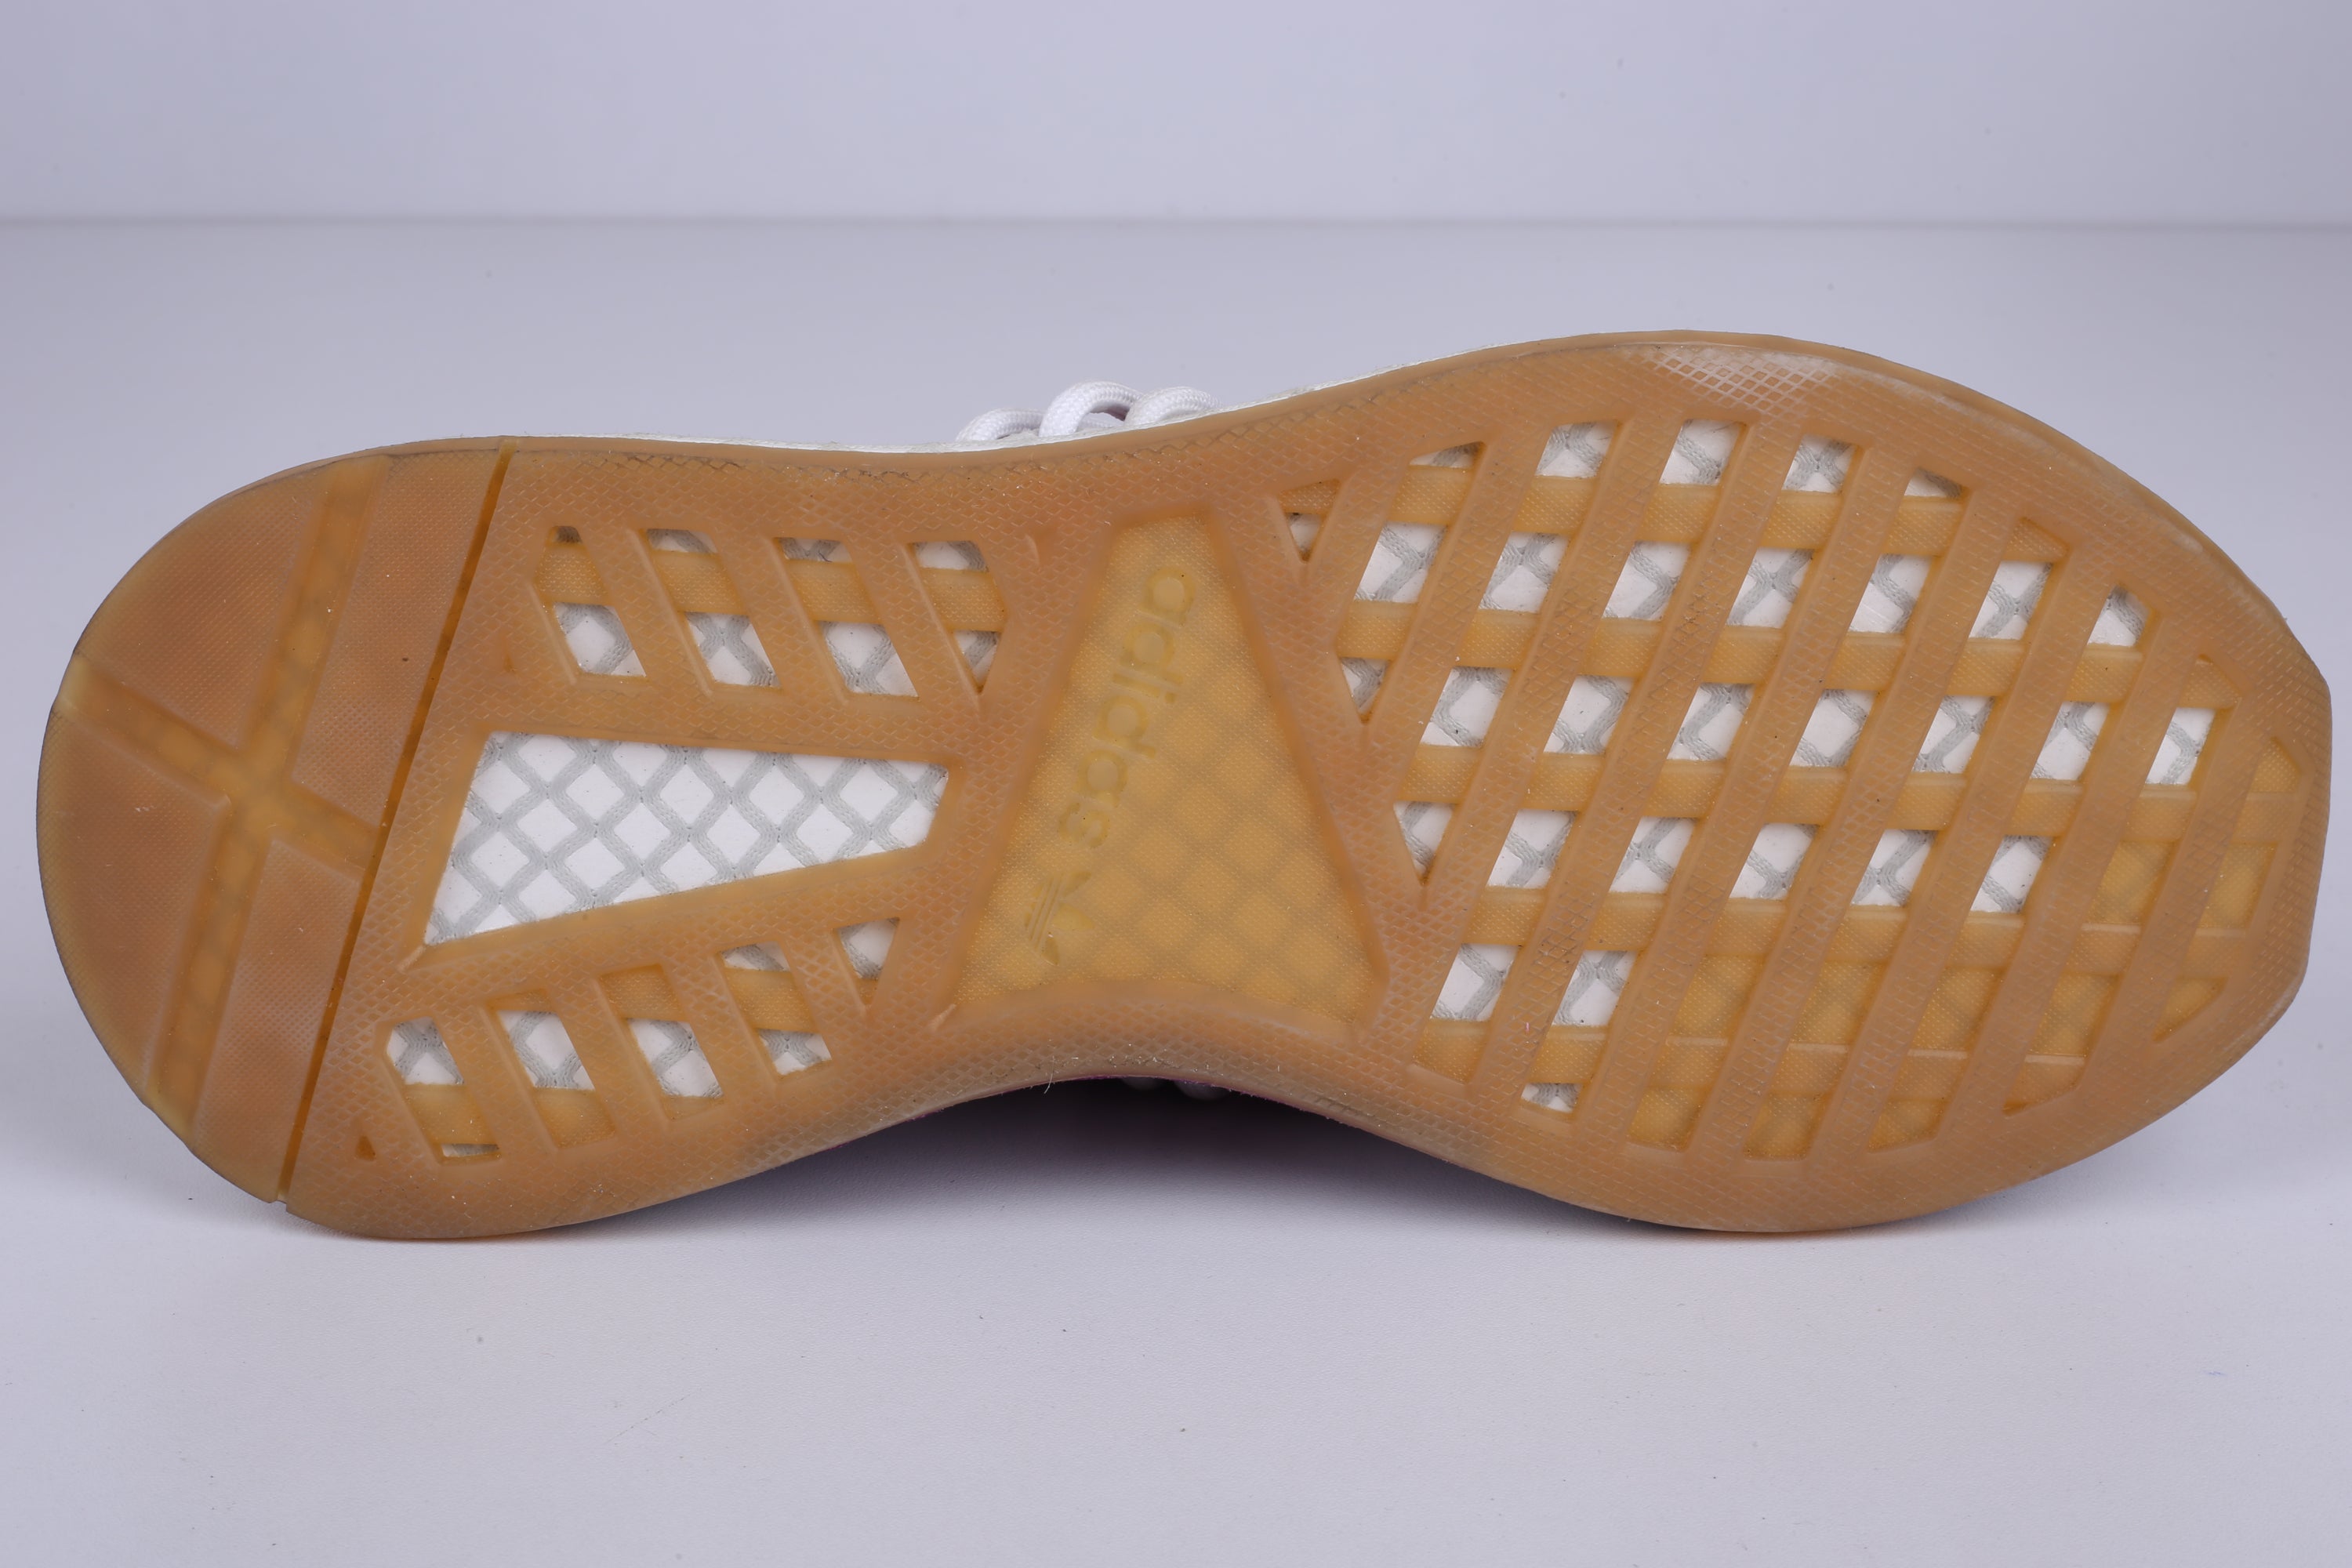 Adidas Deerupt Sneaker  - (Condition Premium*)